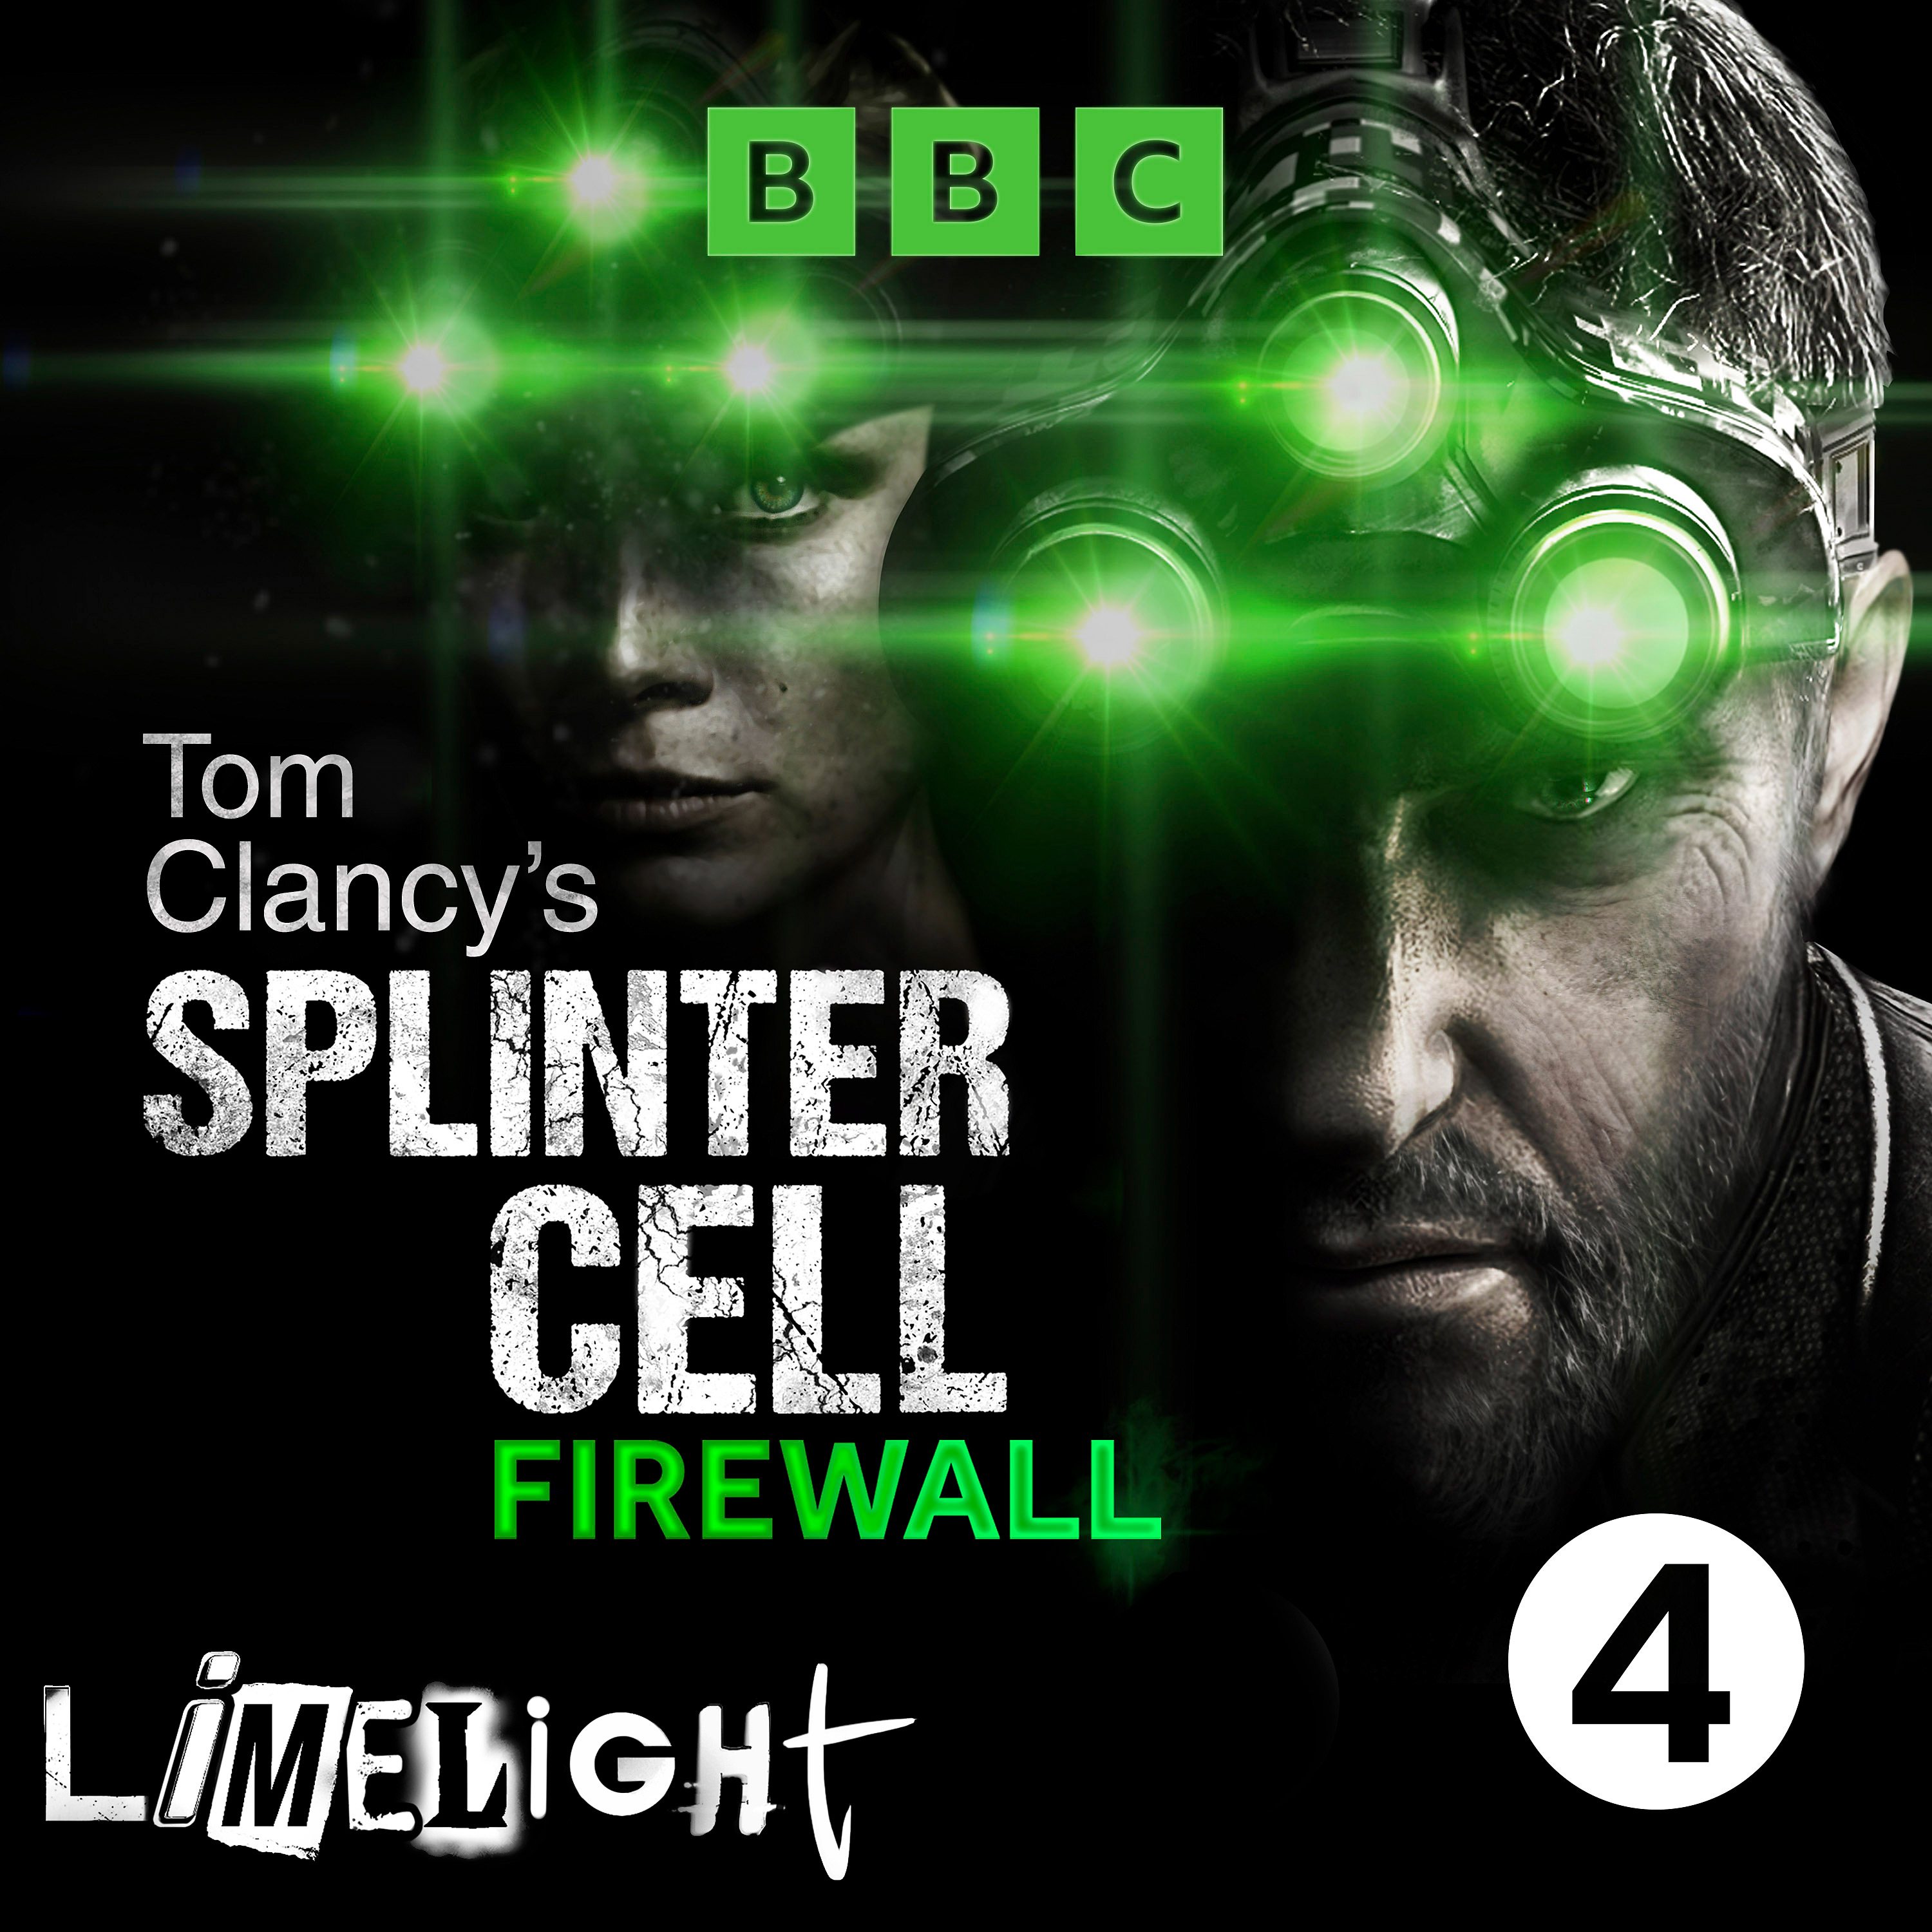 Tom Clancy’s Splinter Cell: Firewall, Episode 6